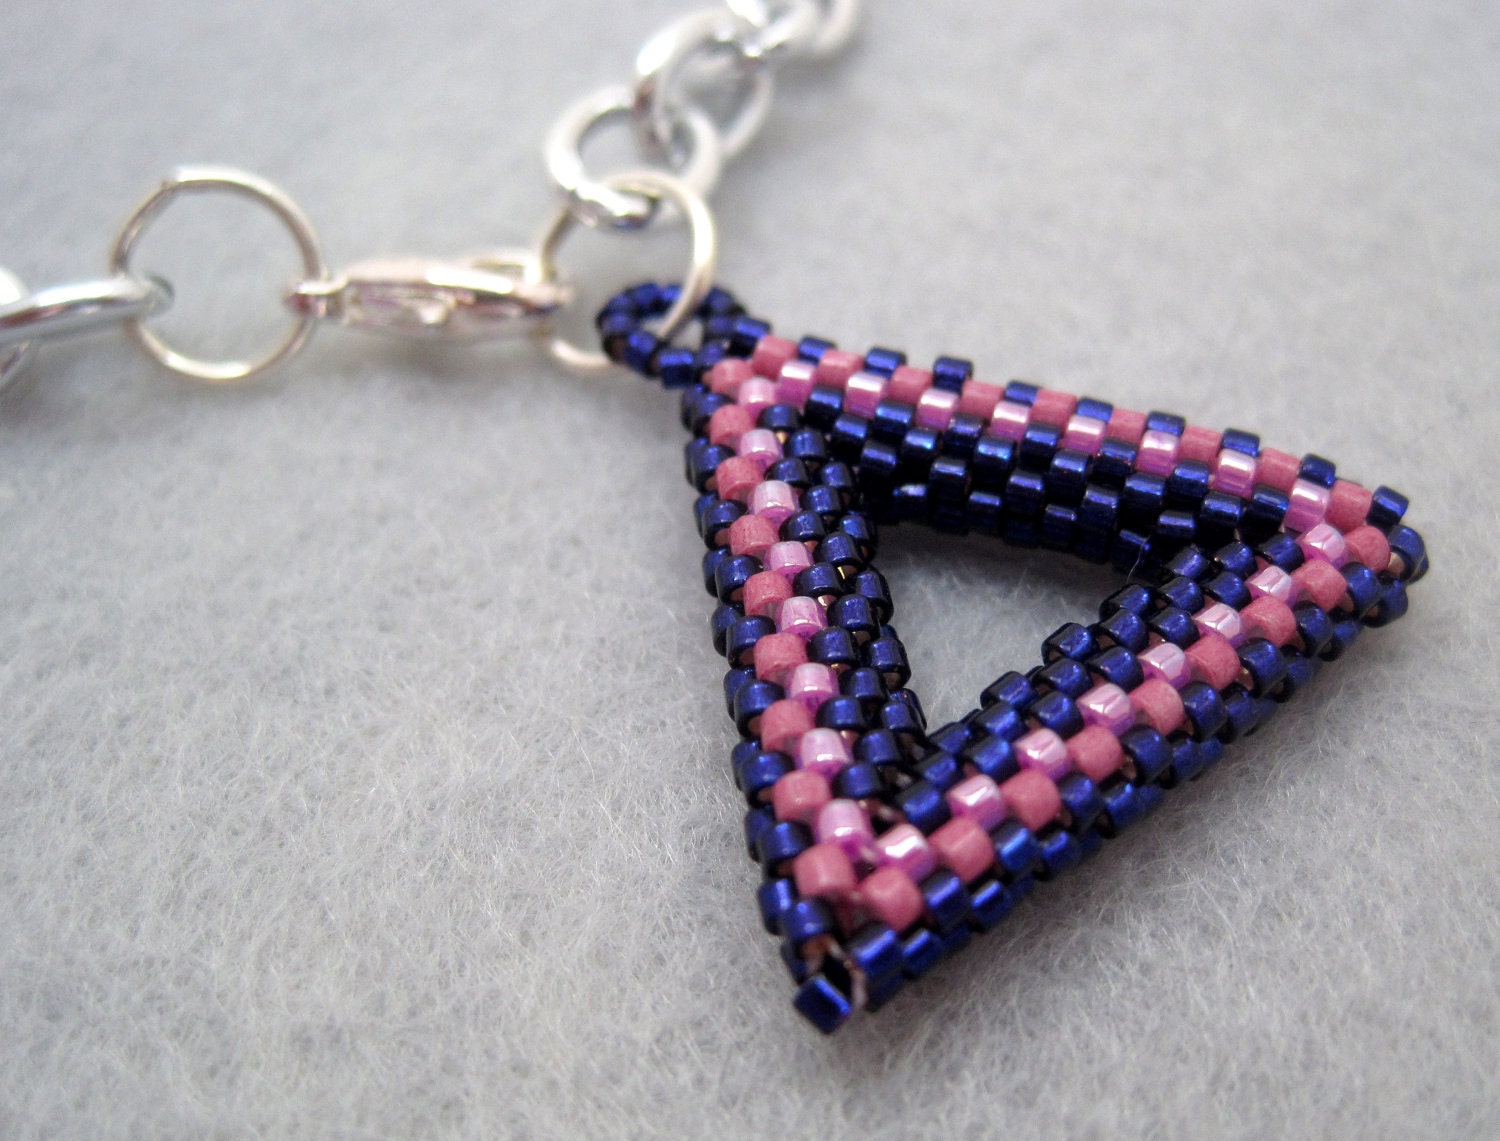 Silver Chain Links Necklace - Tubular Peyote Triangle Charm - Light Dark Purple by randomcreative on Etsy - randomcreative